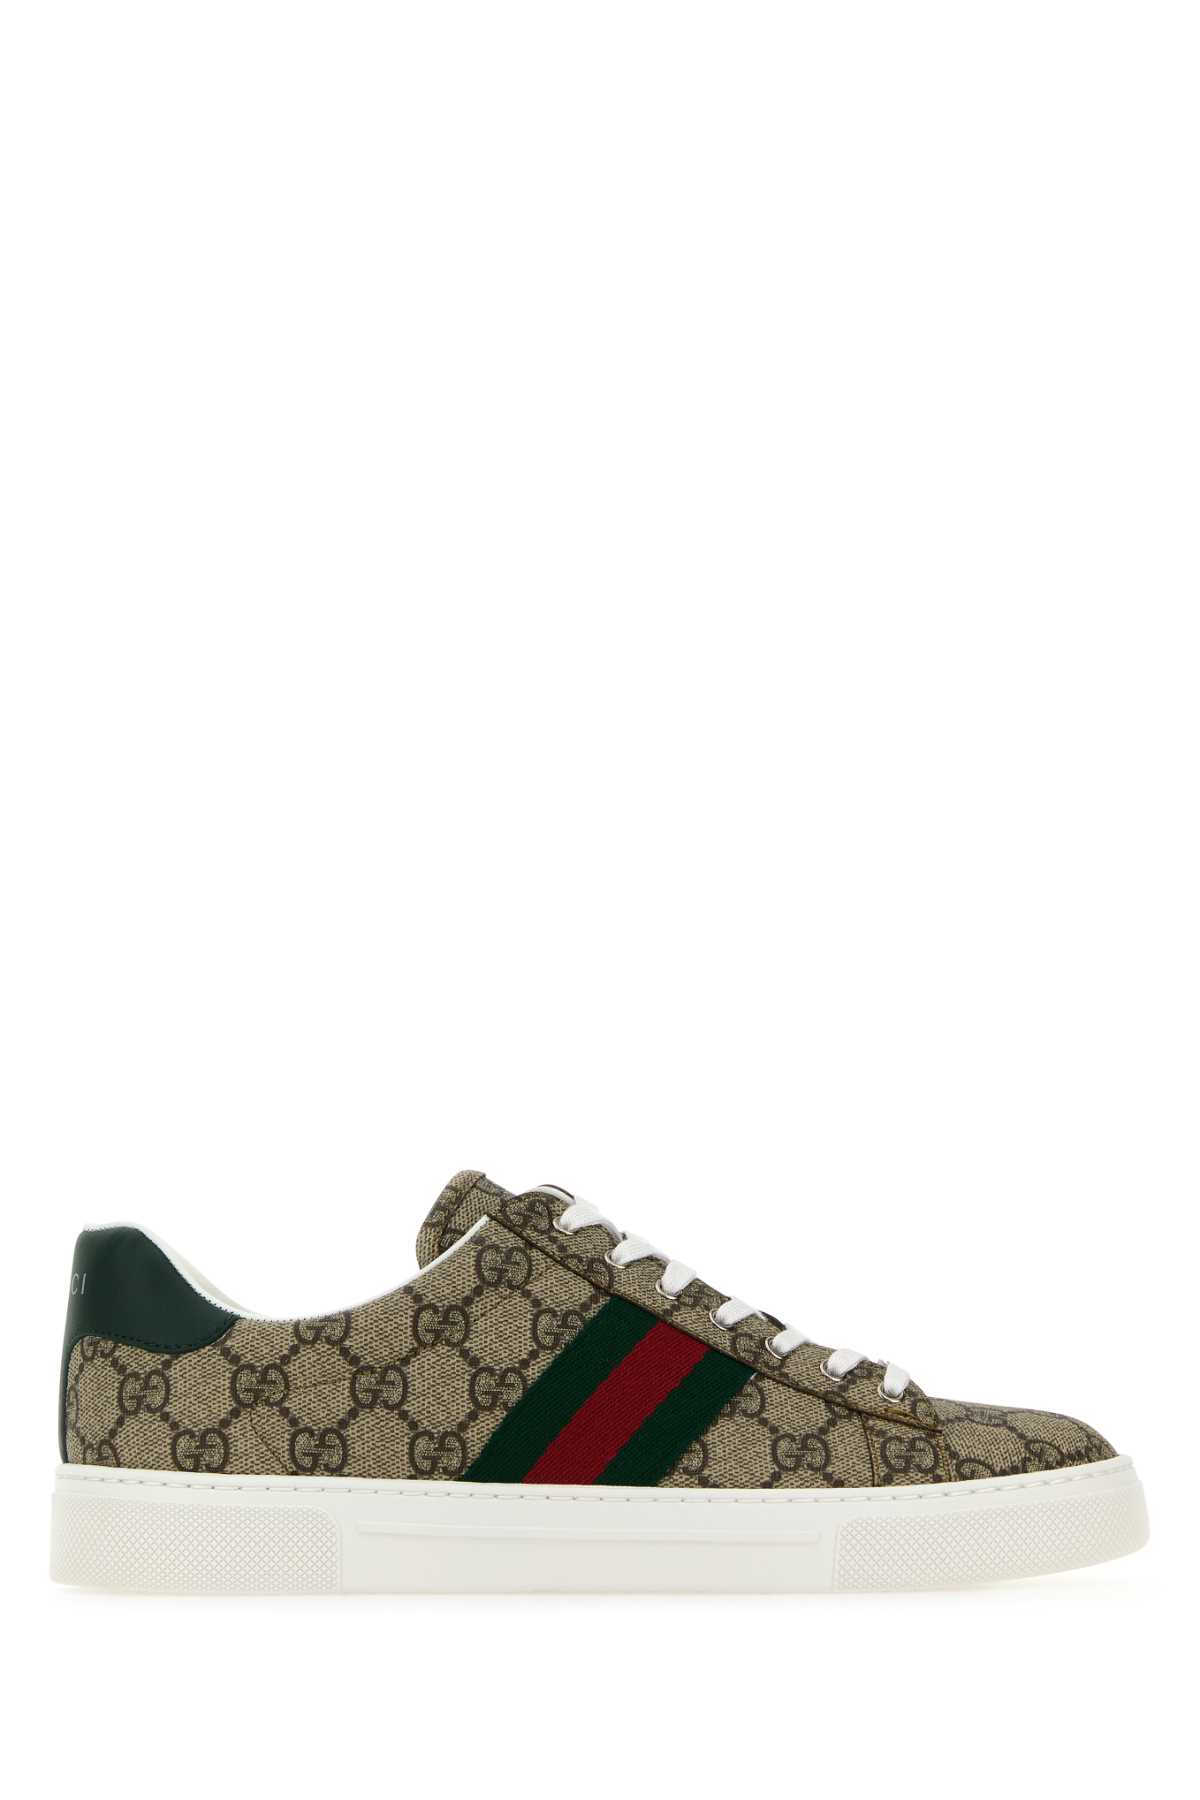 Gg Supreme Fabric Gucci Ace Sneakers